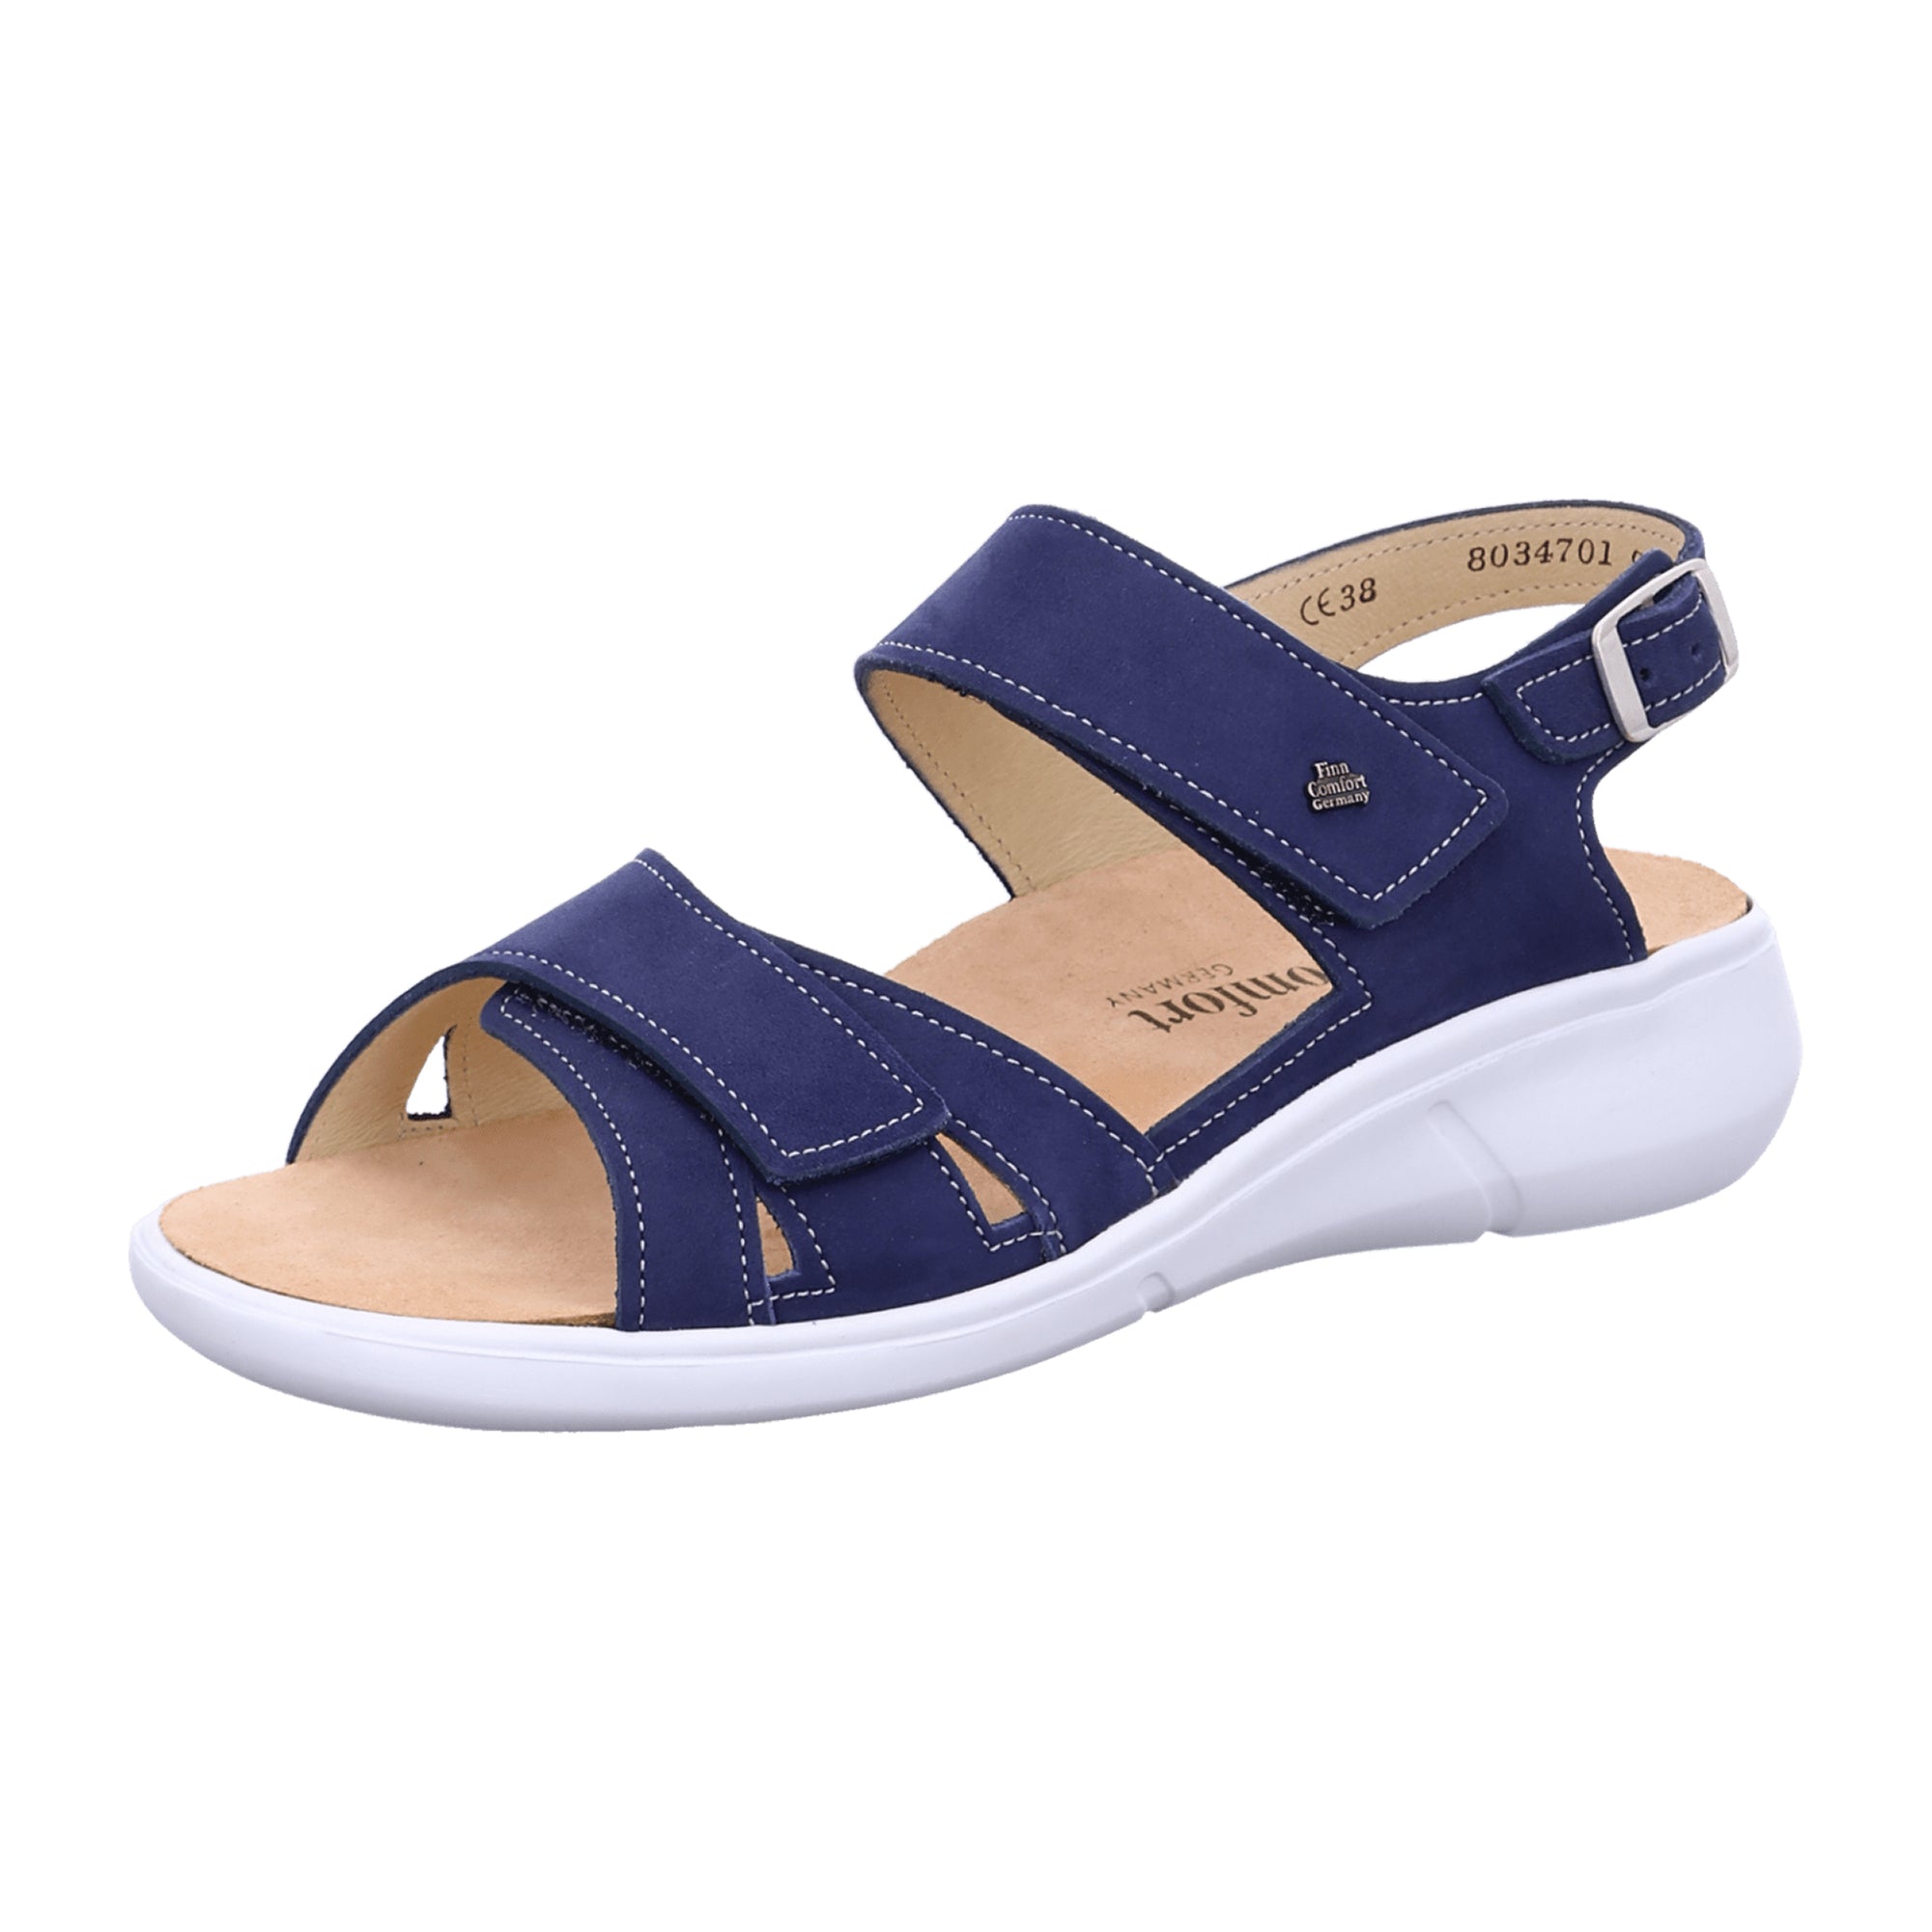 Finn Comfort Nadi Women's Comfortable Shoes - Stylish Blue, Durable Design - 03351-711047